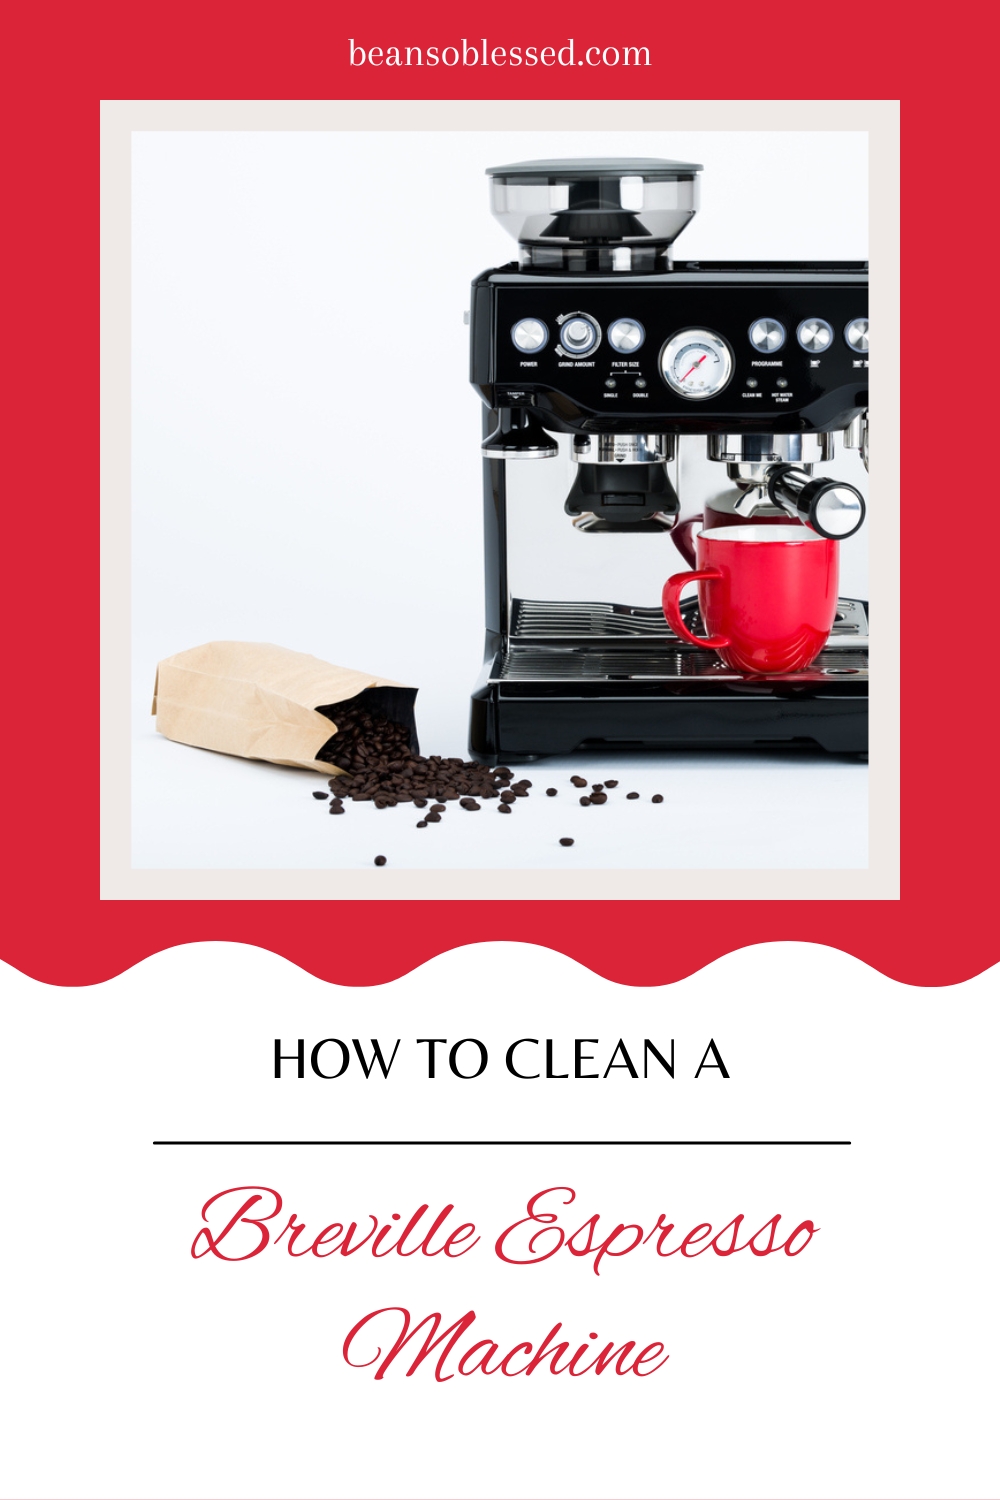 image of Breville espresso machine with the text how to clean a Breville espresso machine